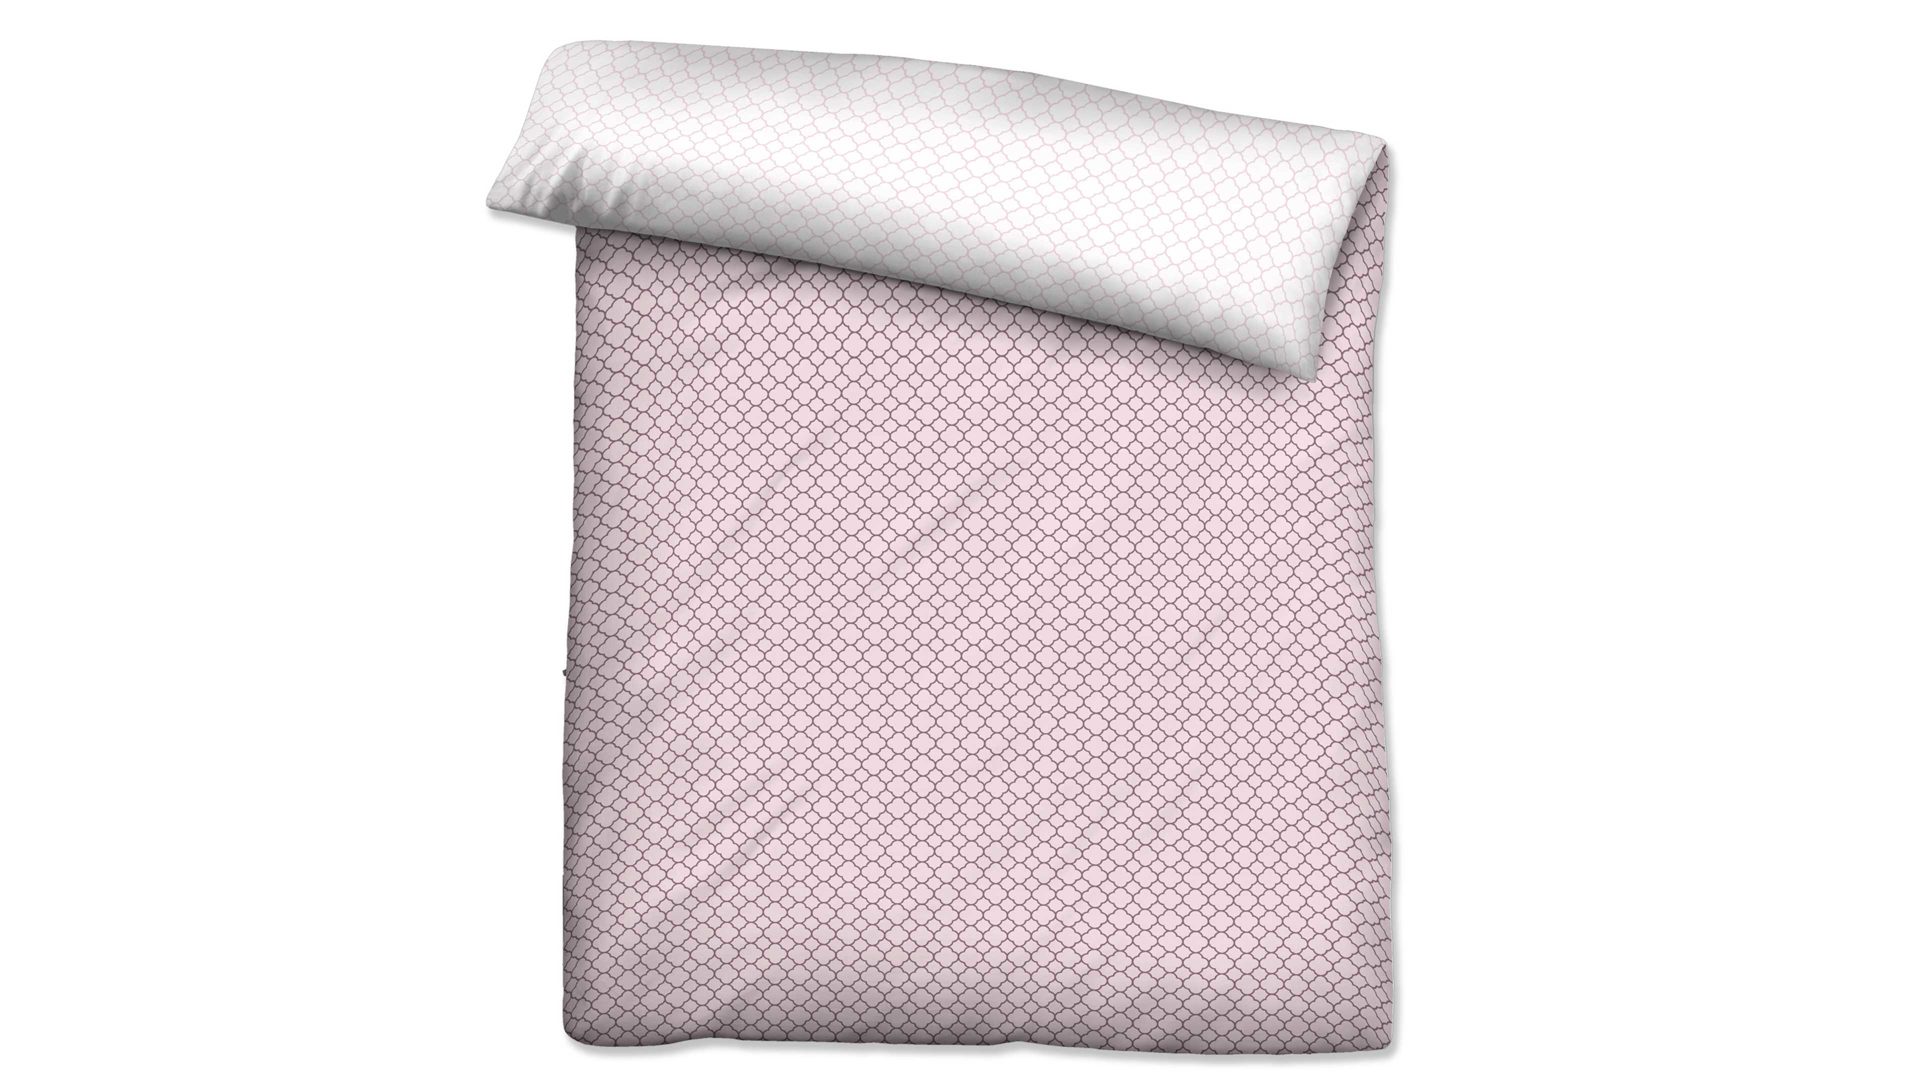 Bettbezug Biberna aus Stoff in Pastell biberna Mako-Satin Bettdeckenbezug Grafik Mix & Match rosefarbenes & weißes Grafikmuster – ca. 135 x 200 cm